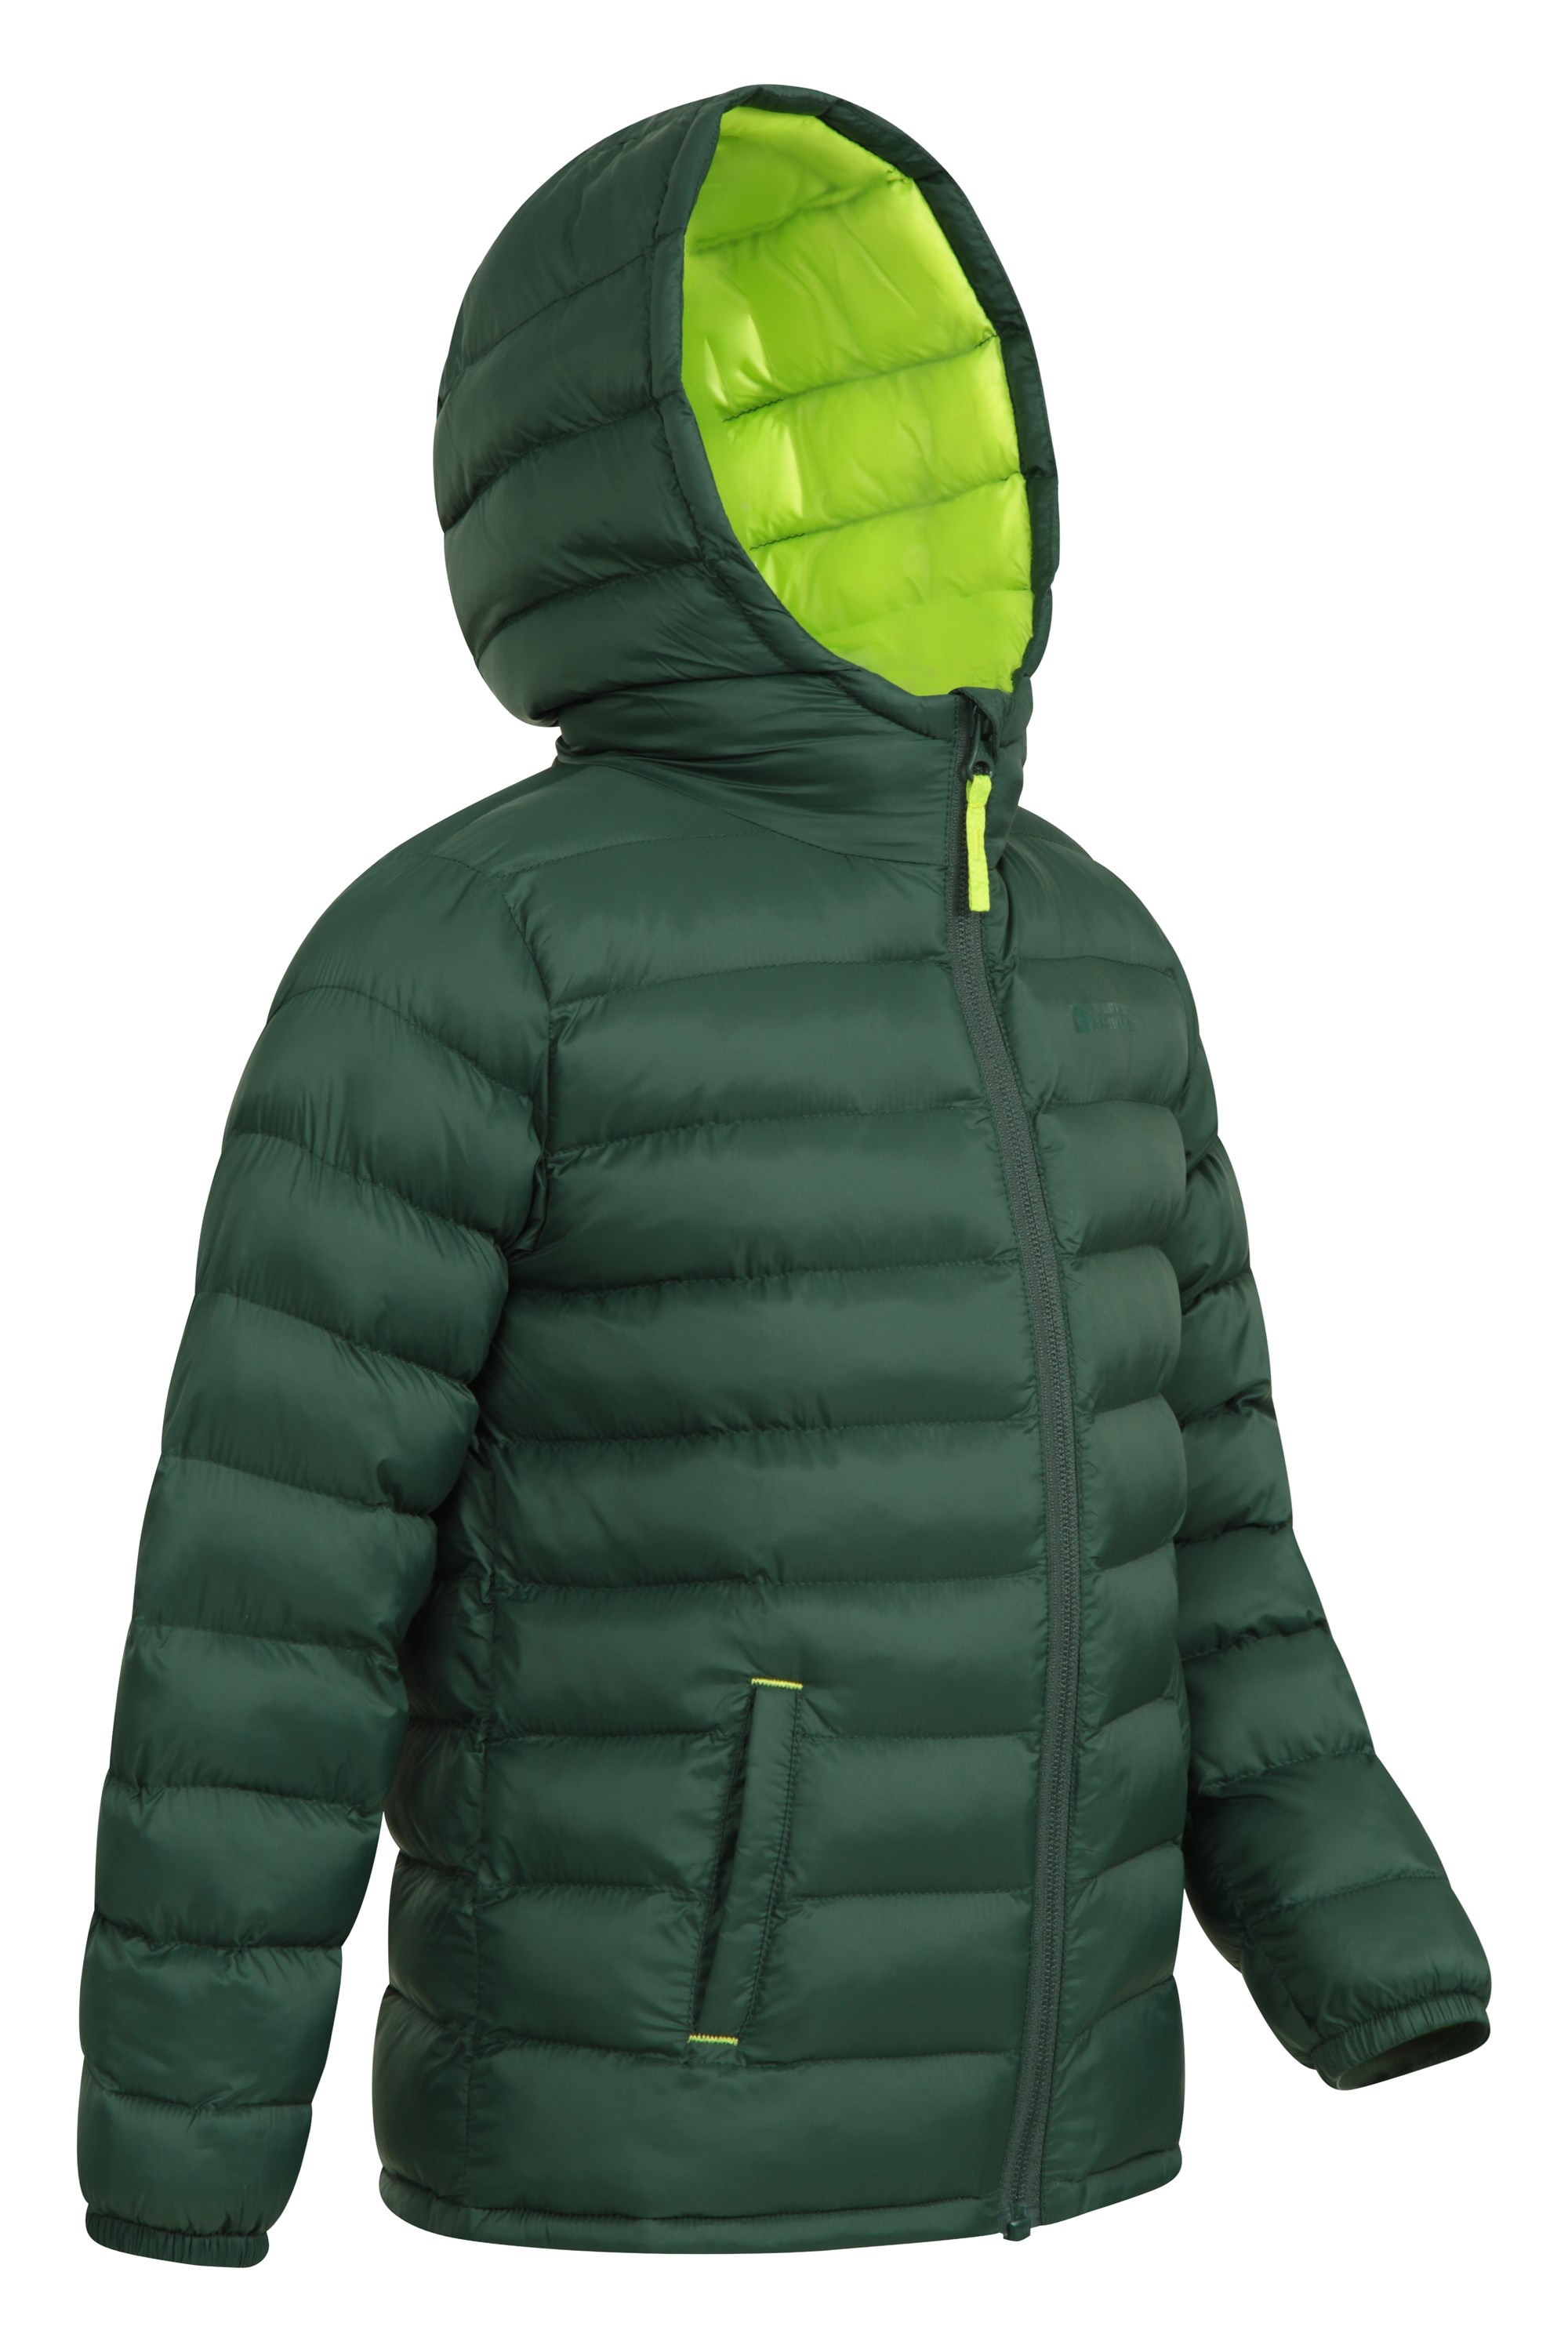 Mountain Warehouse Printed Seasons Boys Padded Jacket Winter Coat 